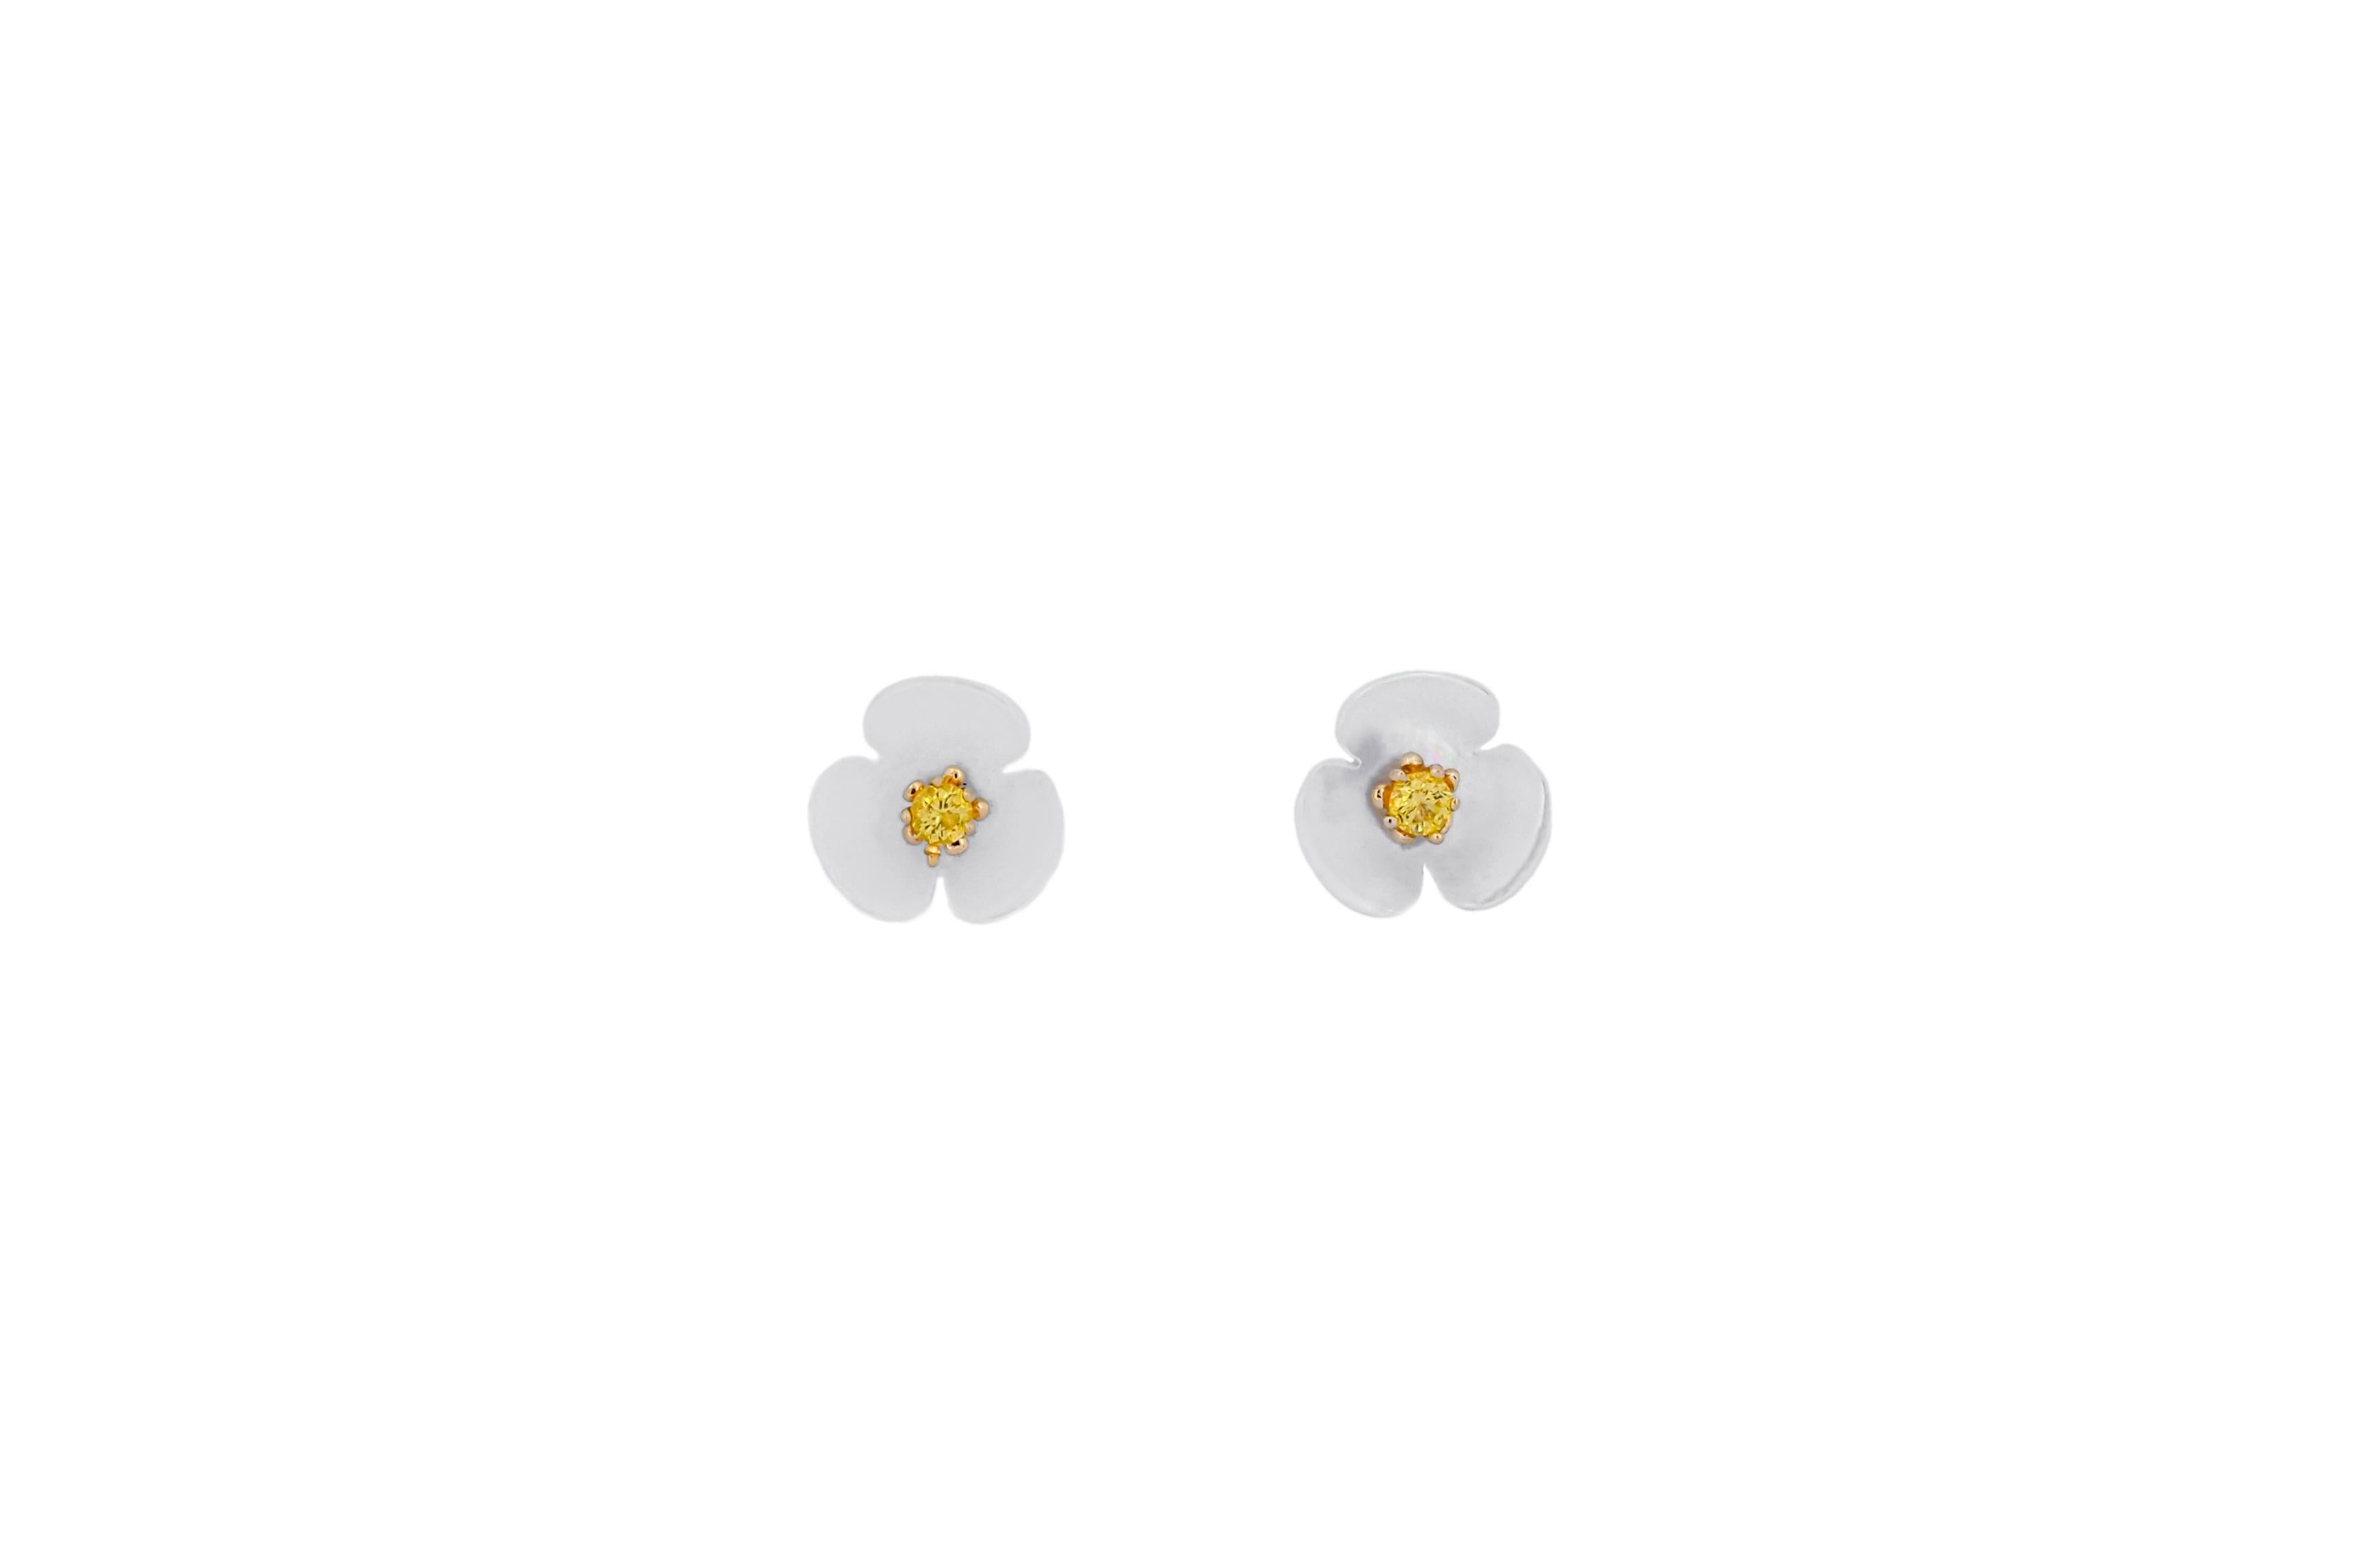 14k gold carved flower earrings studs. 3 petal flower earrings. Yellow sapphire 14k gold earrings. Flower gold earrings. White flower wedding earrings.

Metal: 14k gold 
Weight: 1.2 gr.
Earrings face: 8 mm.

Gemstones:

2 yellow lab sapphires, 2.5